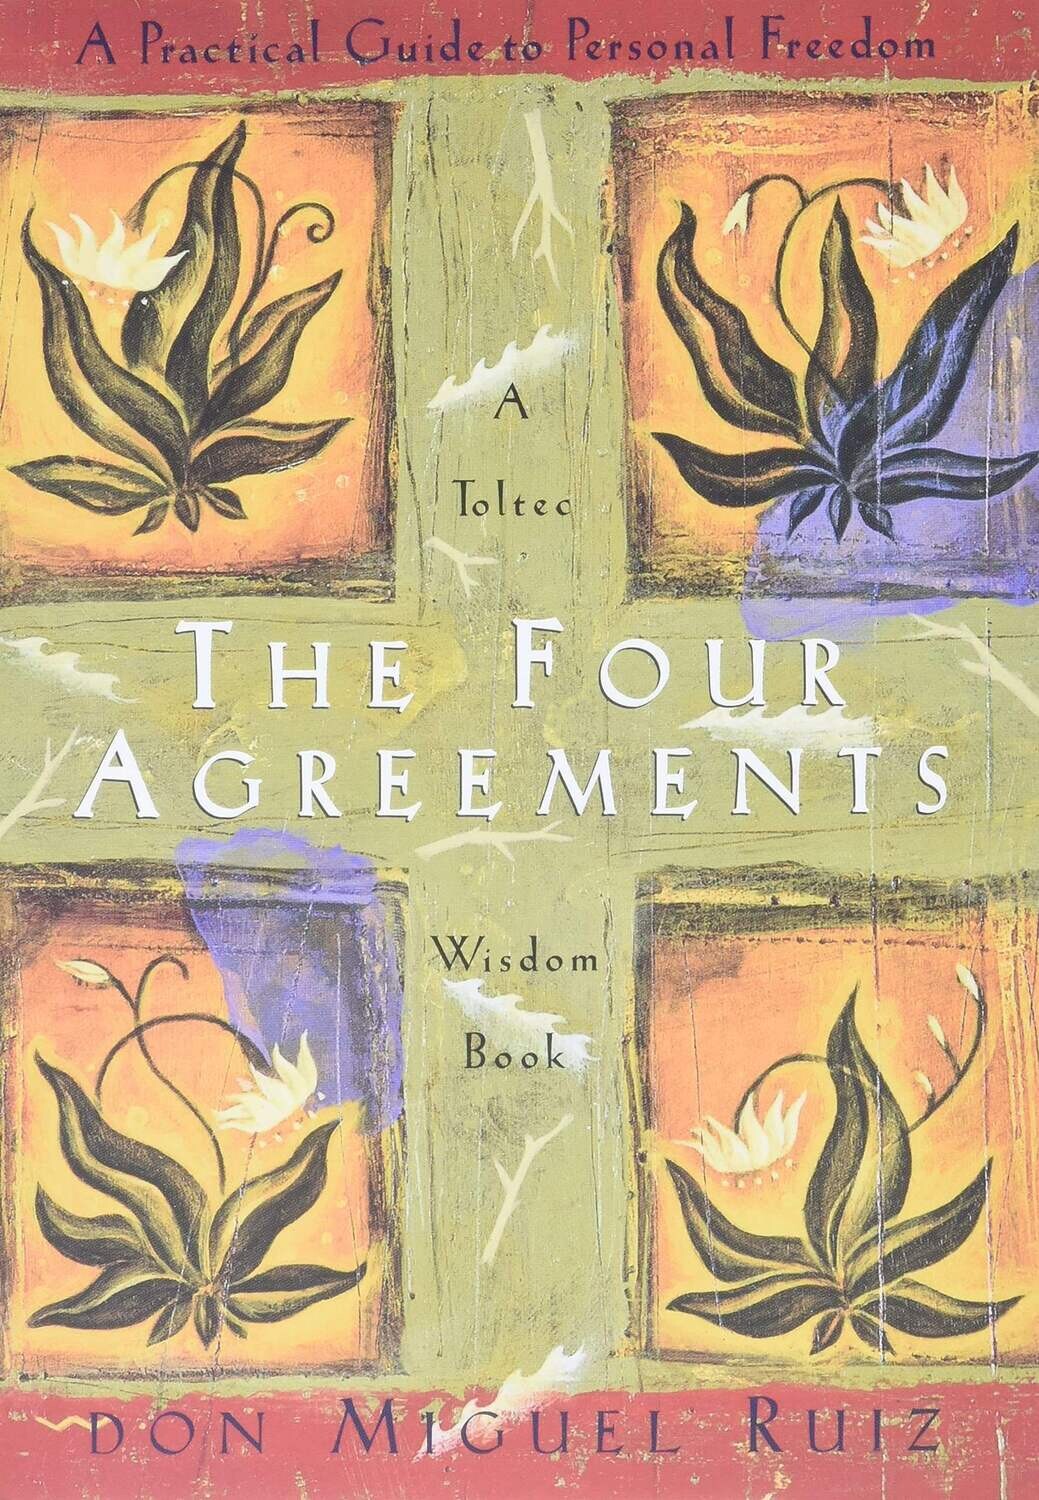 The Four Agreements - Ruiz - PB